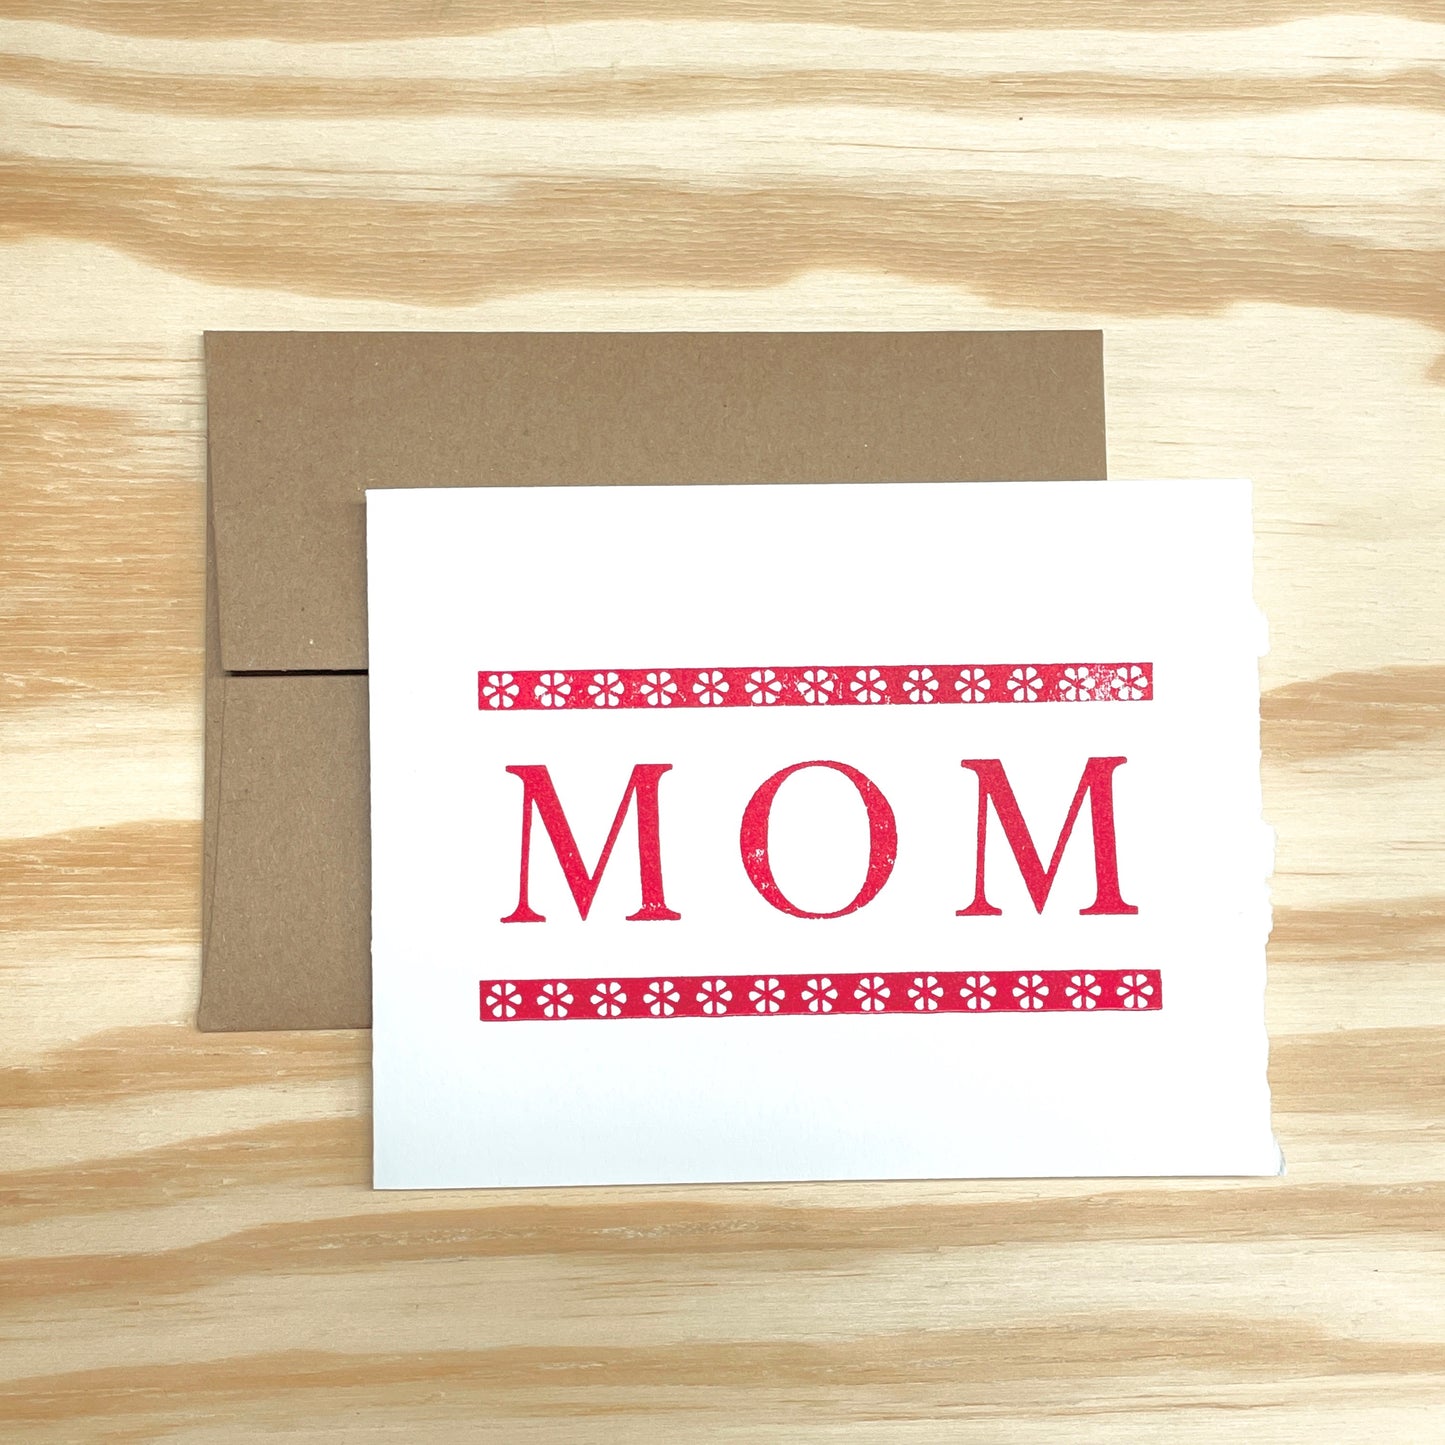 Mom Flowers single card - wood type letterpress printed